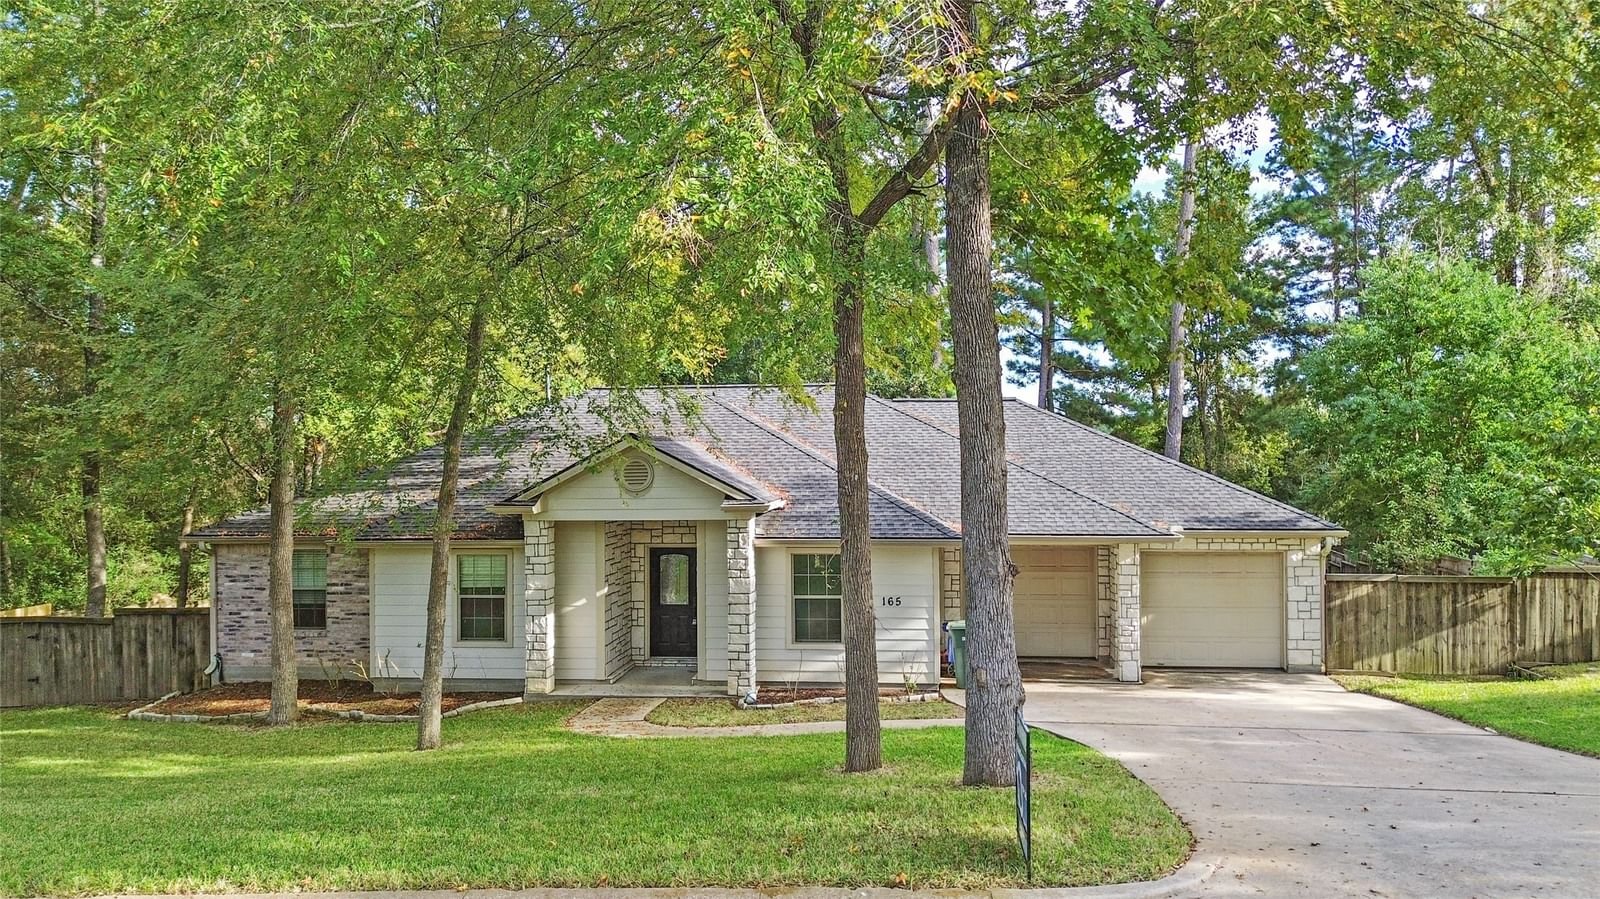 Real estate property located at 165 Broadmoor, Walker, Elkins Lake - Sec 4, Huntsville, TX, US